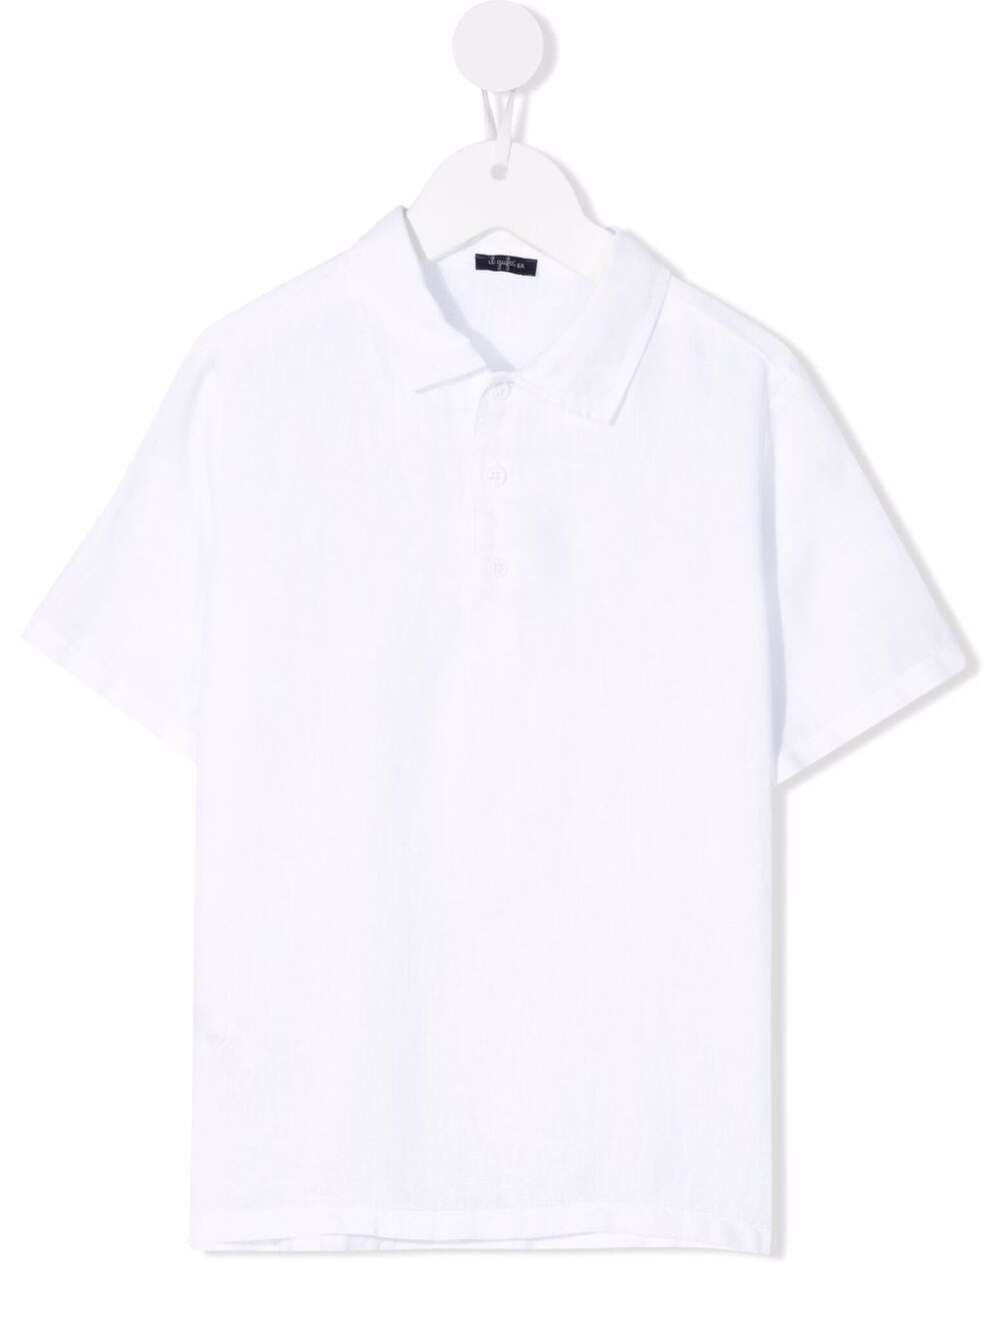 Il Gufo Kids Boys White Linen Polo Shirt